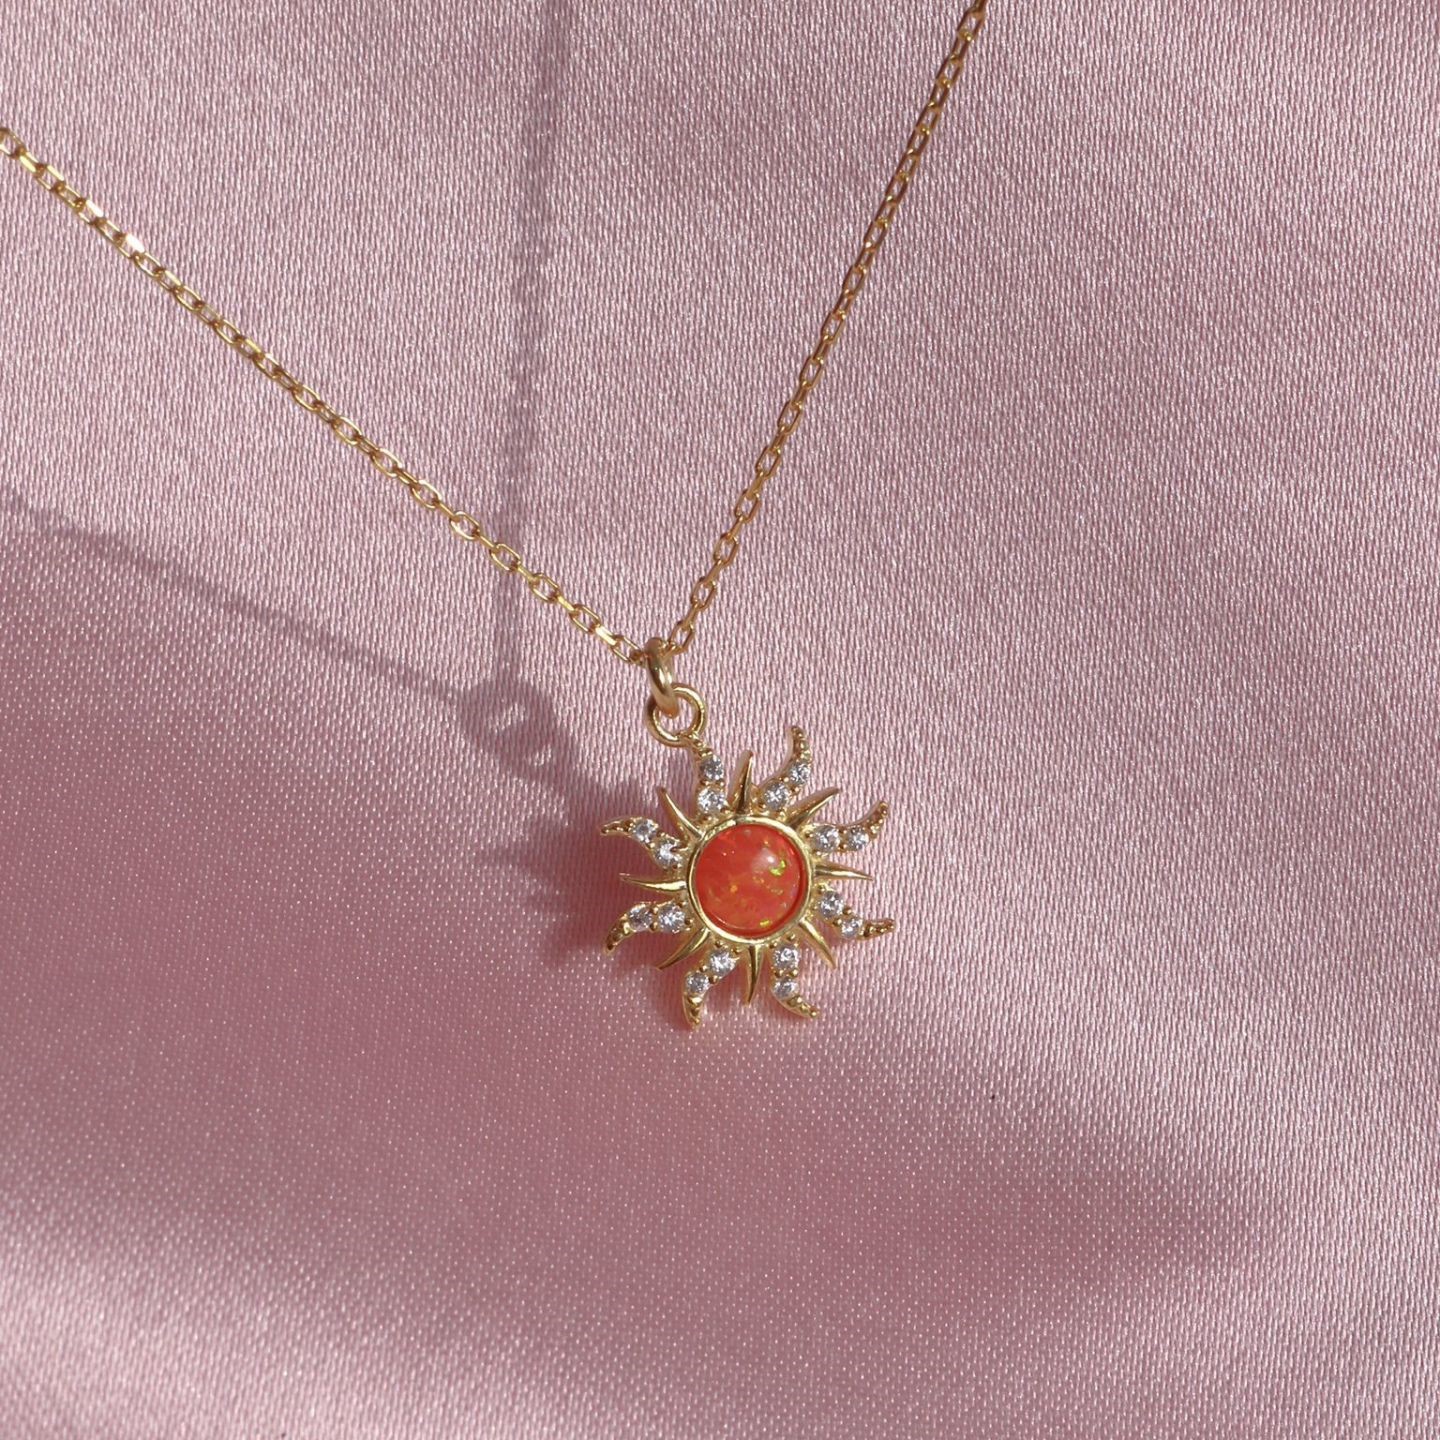 1:Orange Opal gold necklace